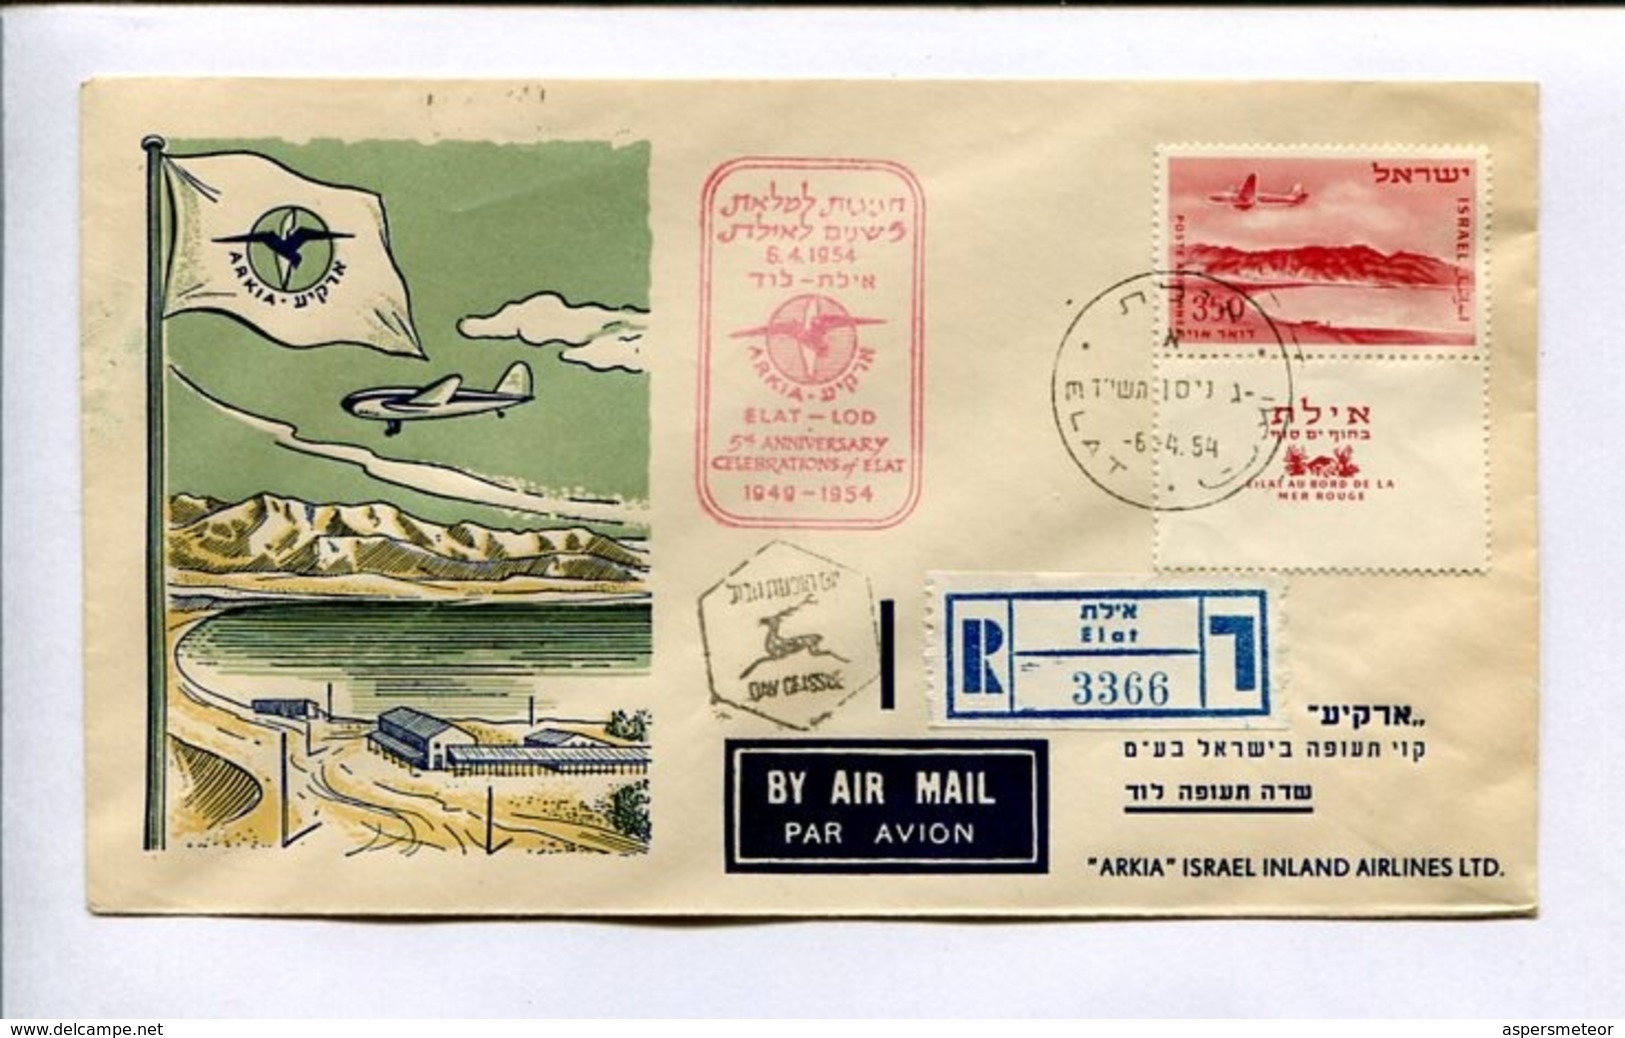 5th ANNIVERSARY CELEBRATION OF ELAT 1949-1954. ARKIA ELAT-LOD 6.4.1954 - ISRAEL AIR MAIL REGISTRED FLIGHT -LILHU - Aéreo